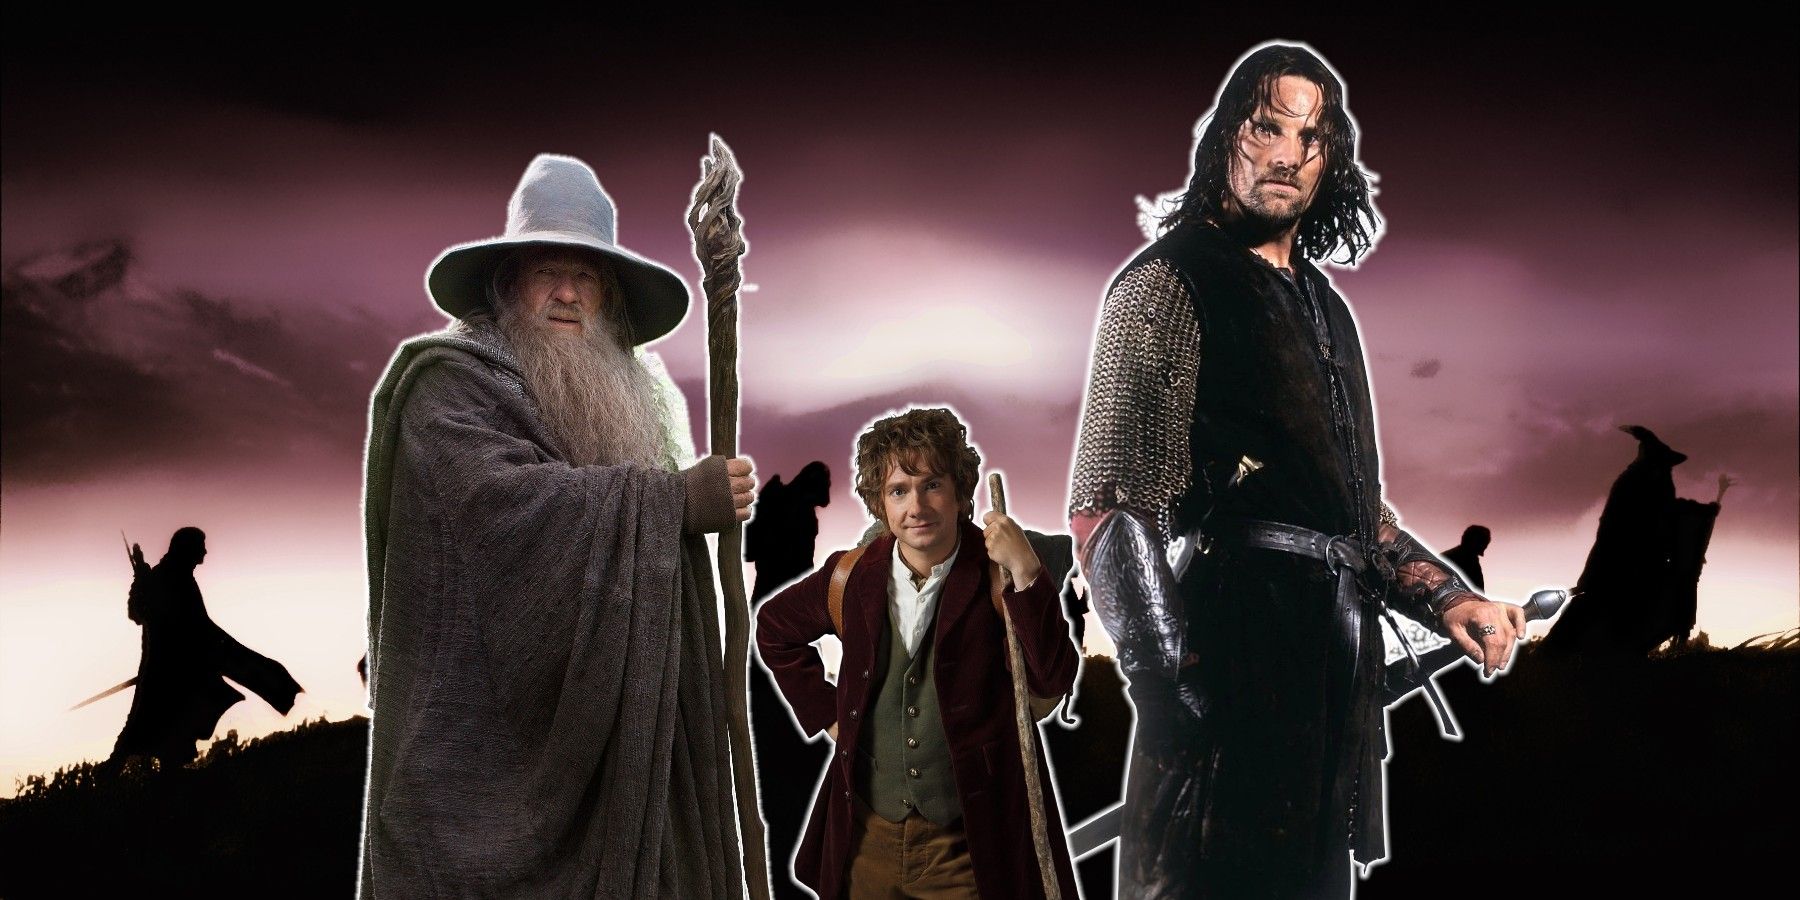 Lord of the Rings Gandalf the Grey Bilbo Baggins Aragorn